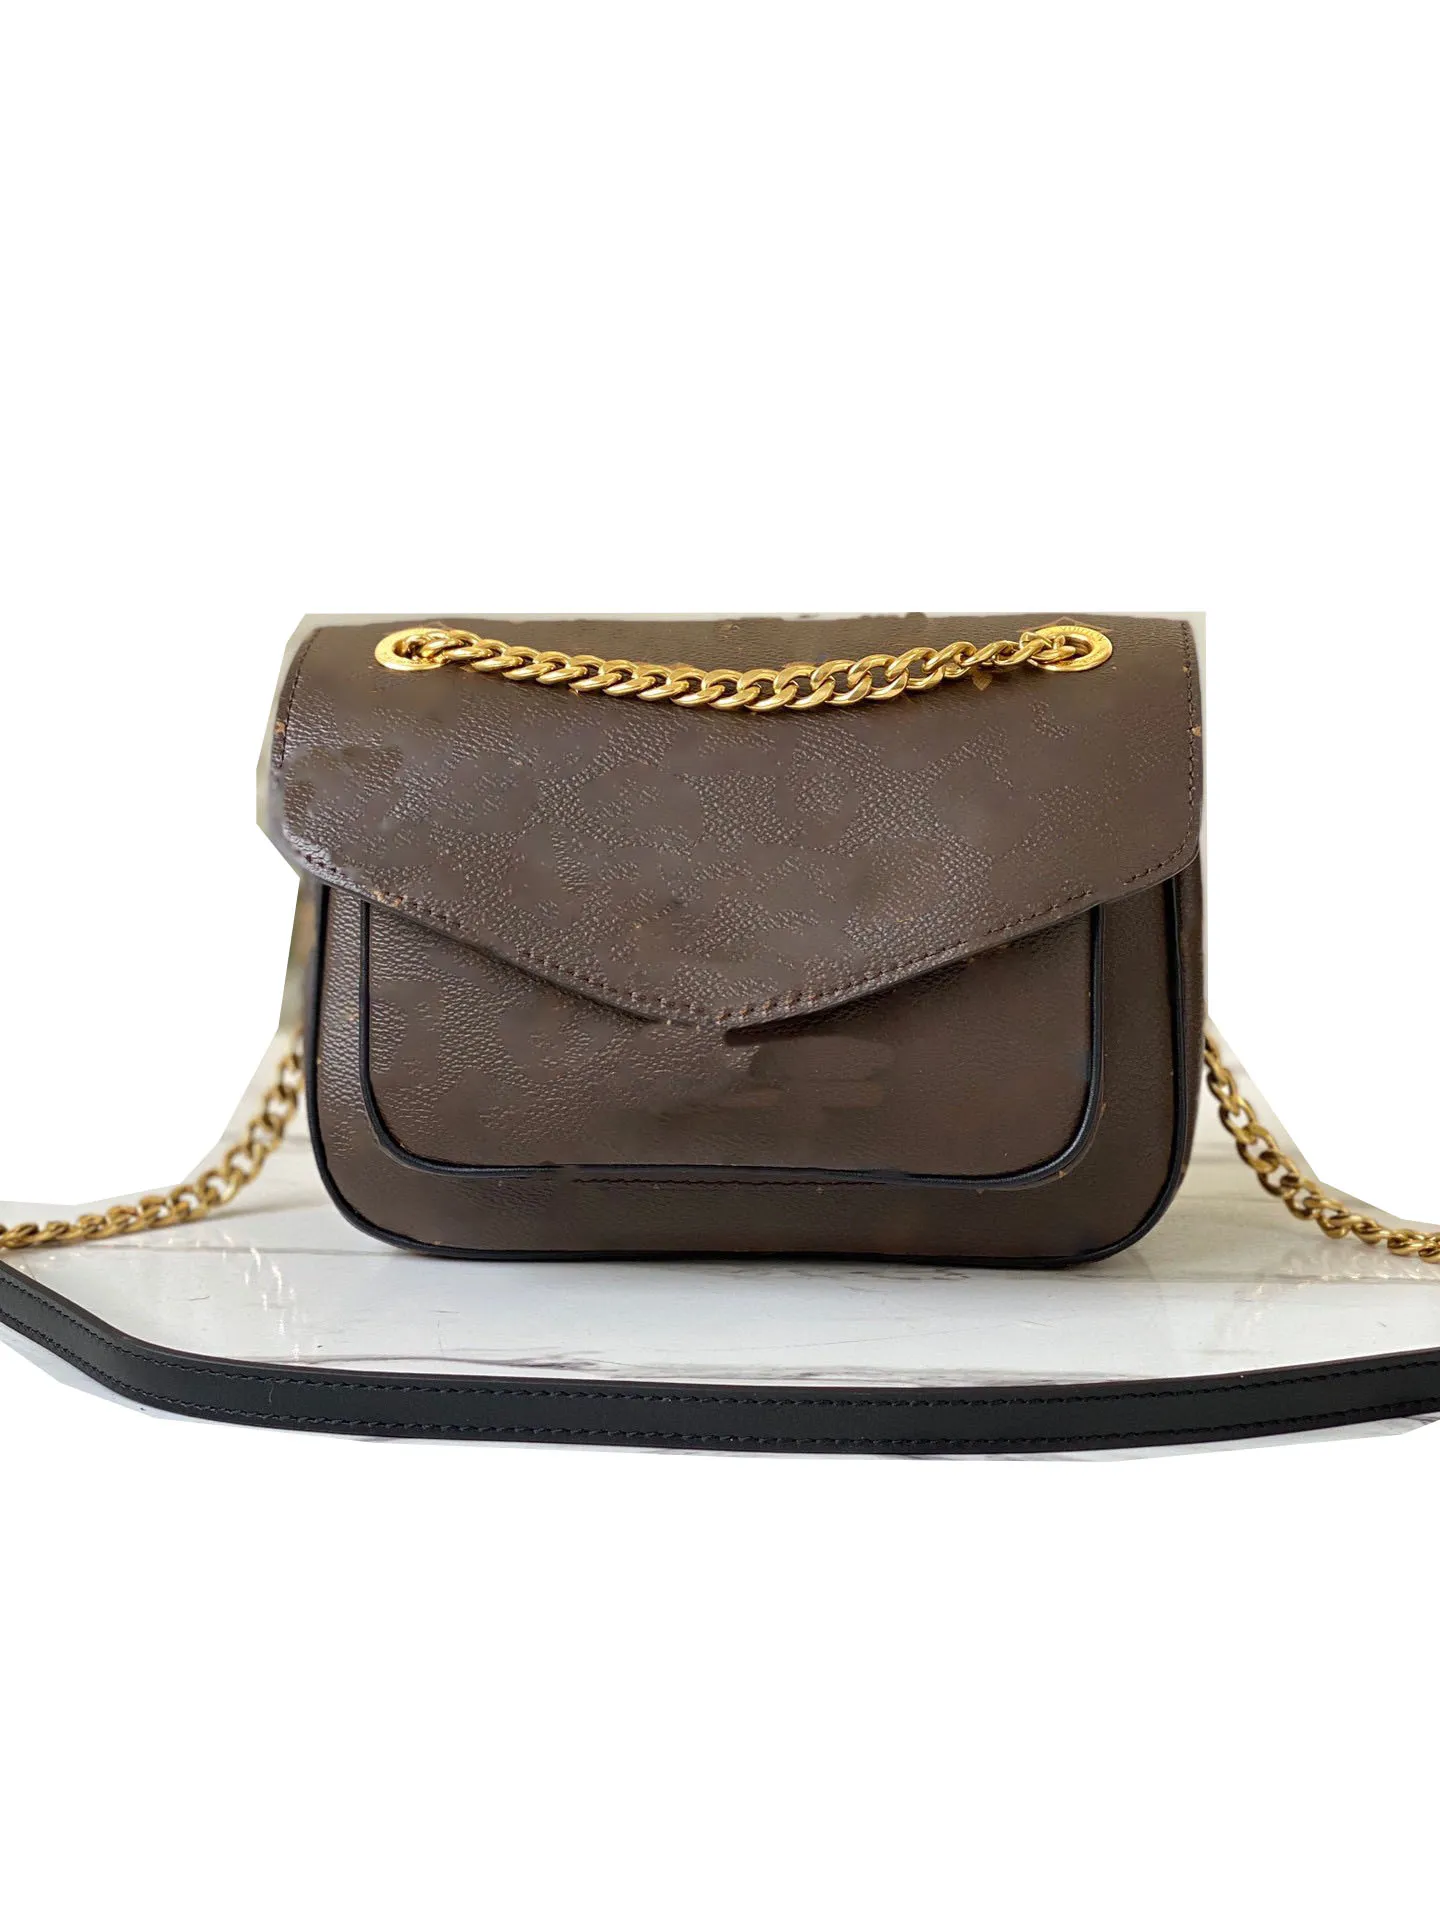 Designer Luxury Fashion Classic Bag Handbag Women's Leather Handbag Women's Crossbody Retro Clutch Handbag Shoulder Crossbody Bags